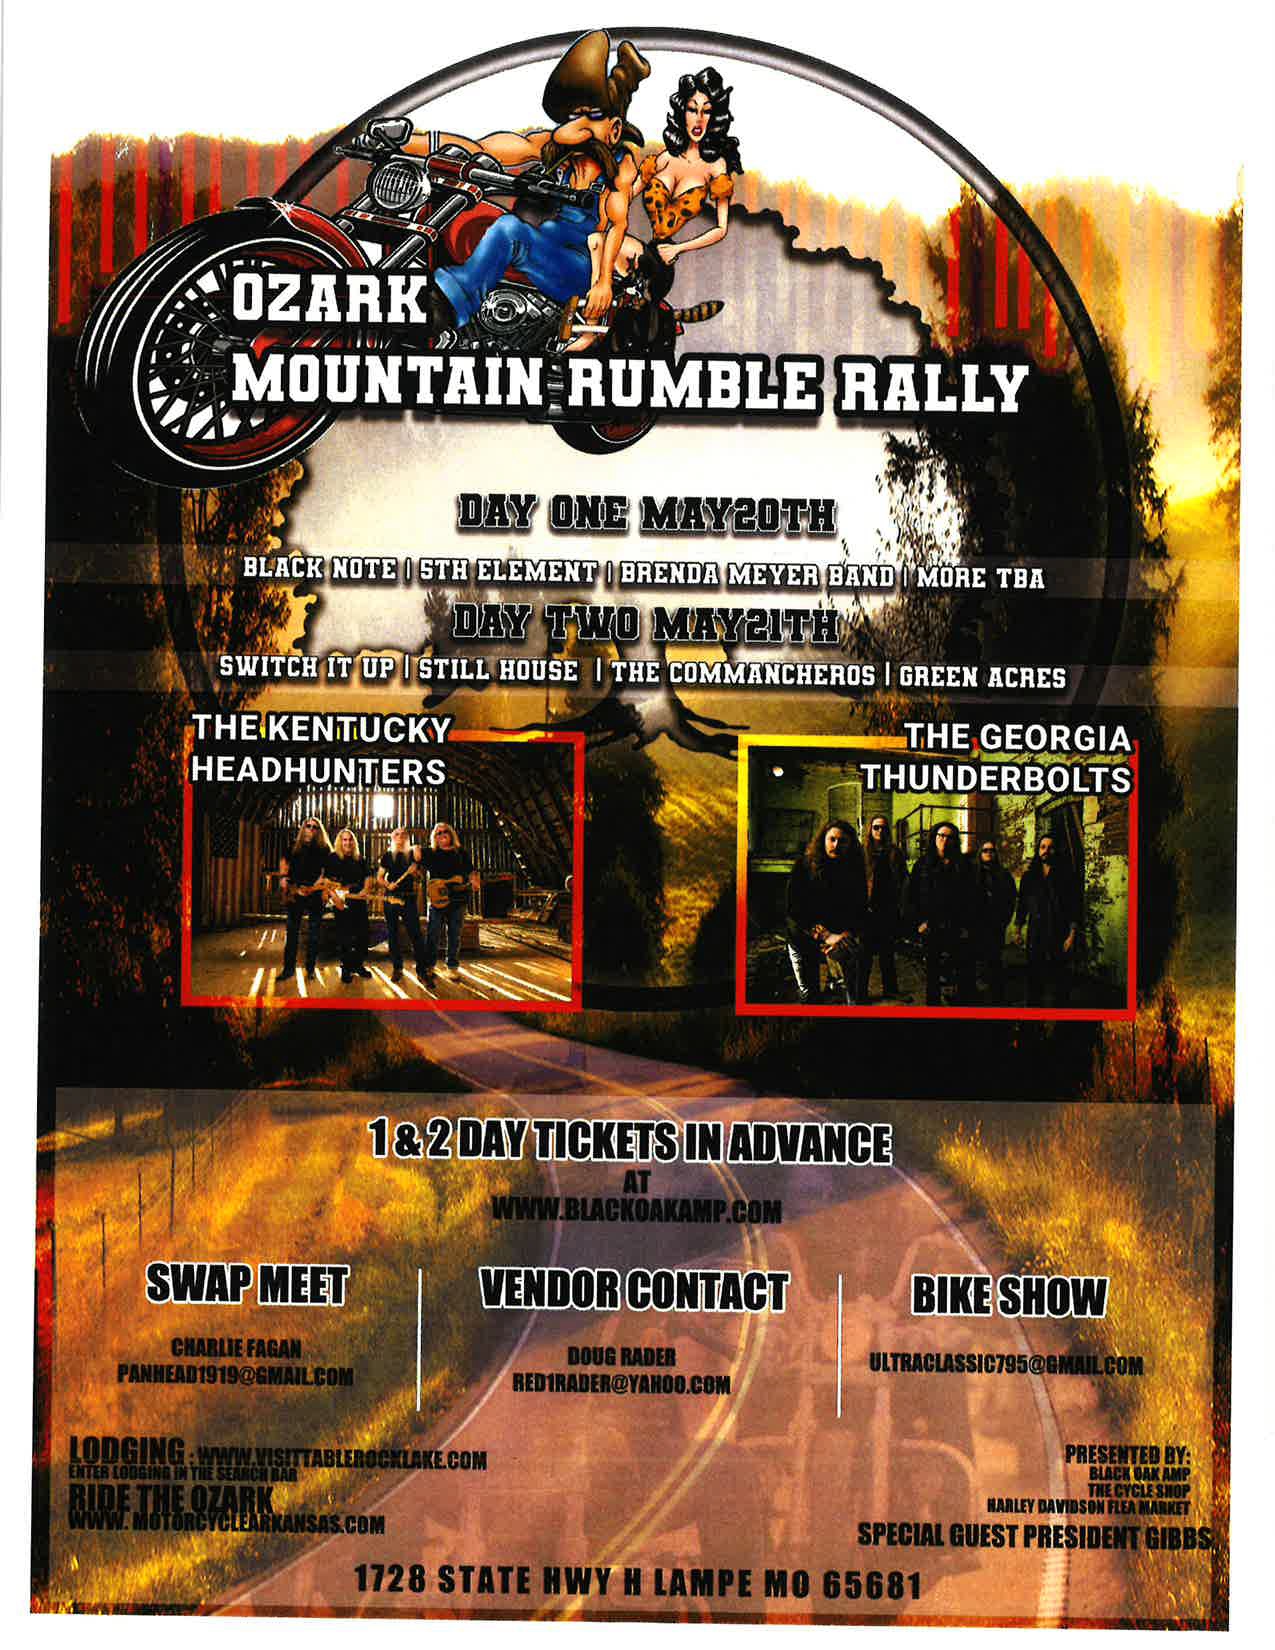 Ozark Mountain Rumble Rally 104.7 The Cave